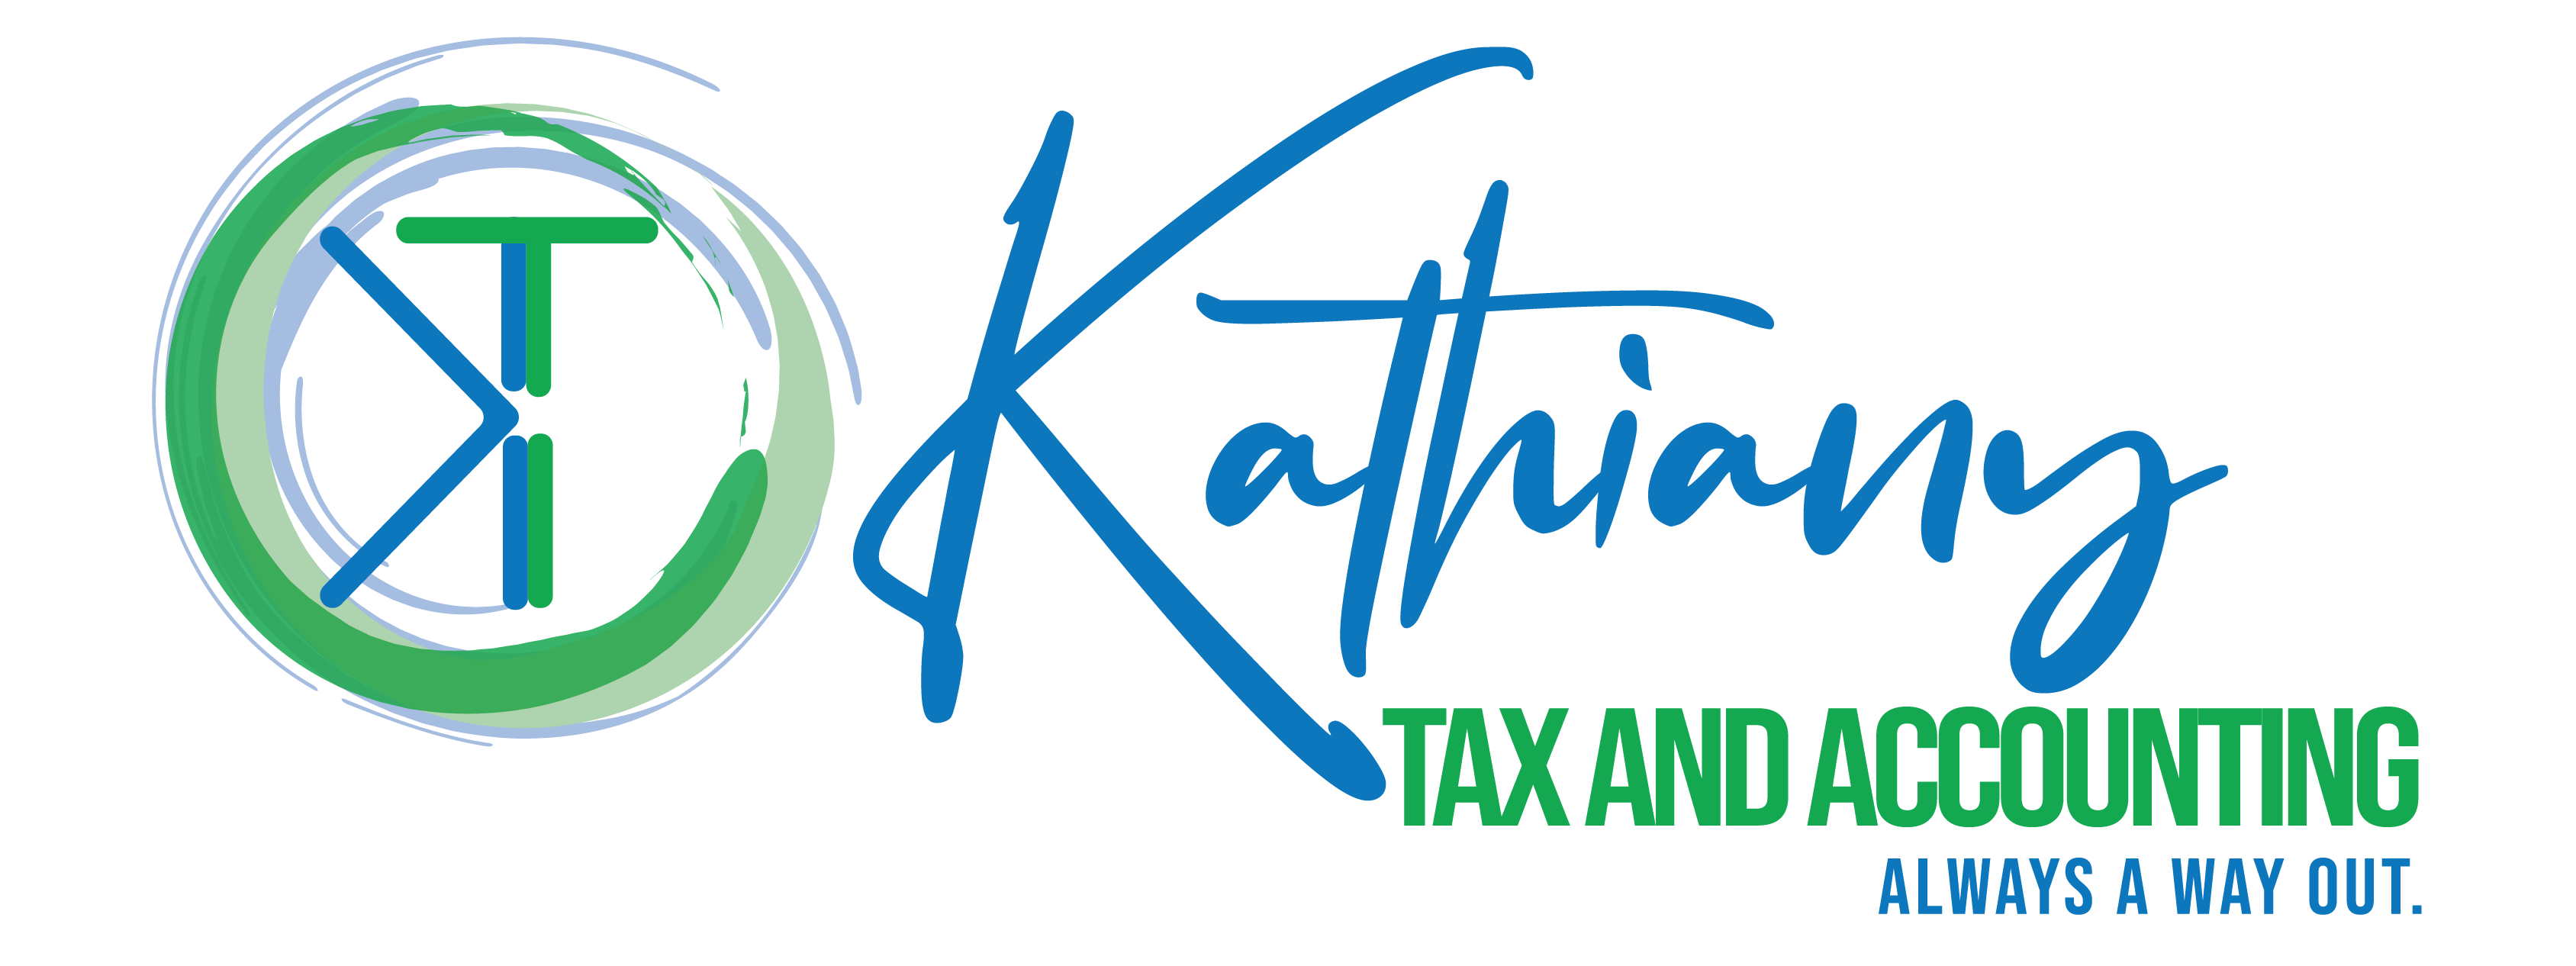 Kathiany Tax and Accounting Service